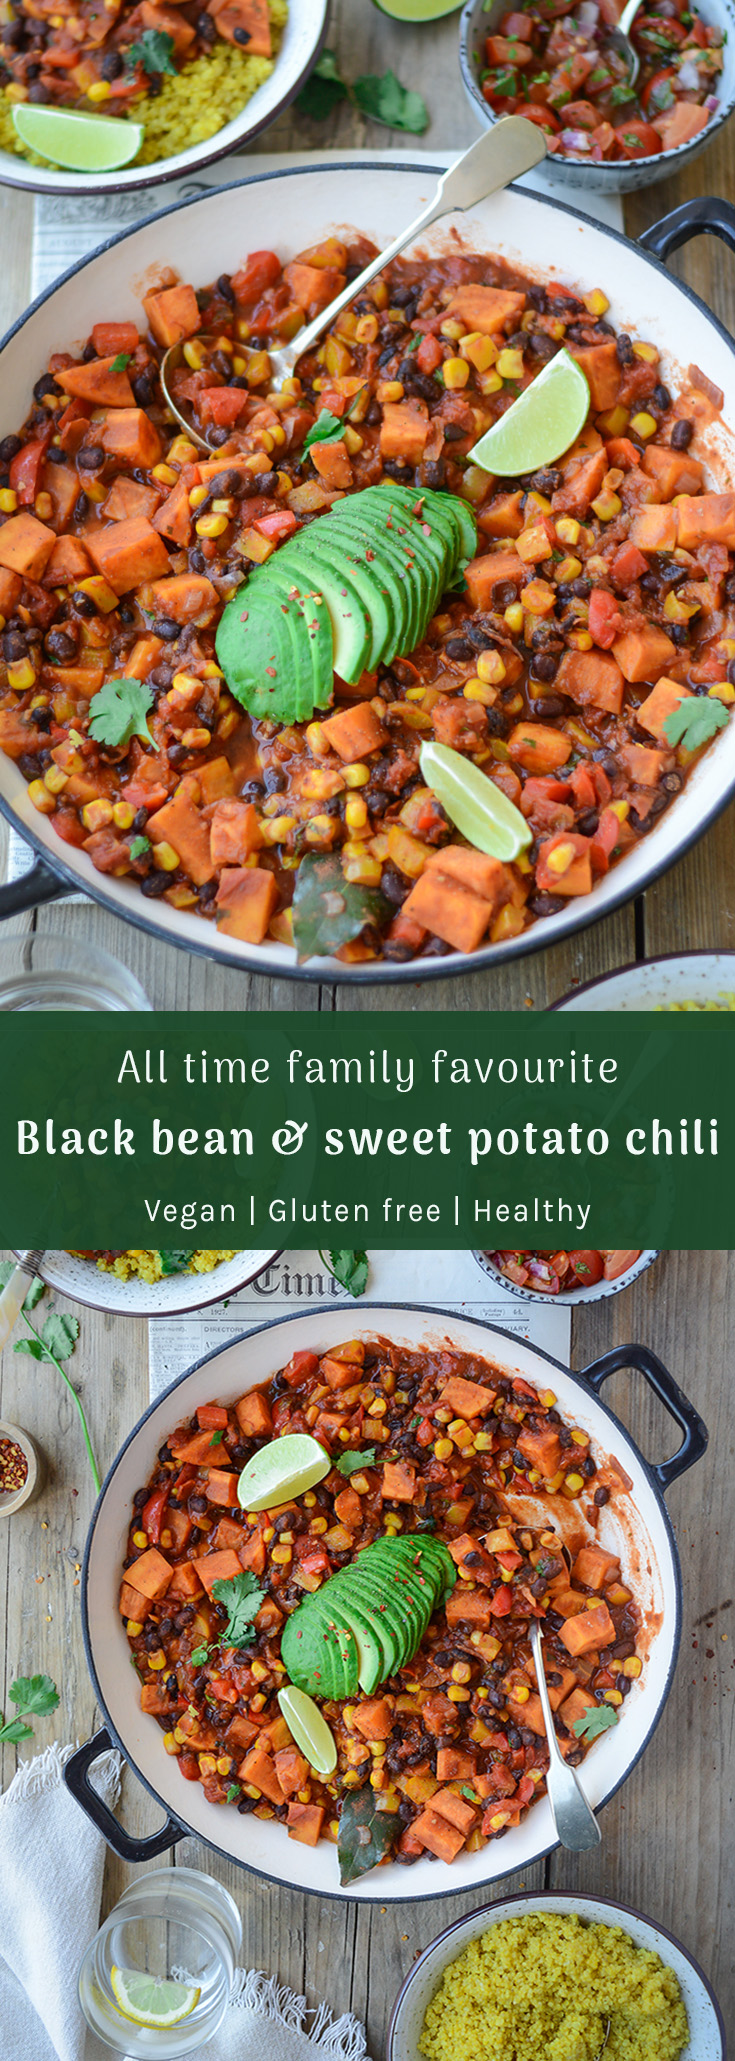 All time family favourite black bean & sweet potato vegan chili via Fit Foodie Nutter #vegandinner #familyfriendly #meatfreemonday #cleaneating 